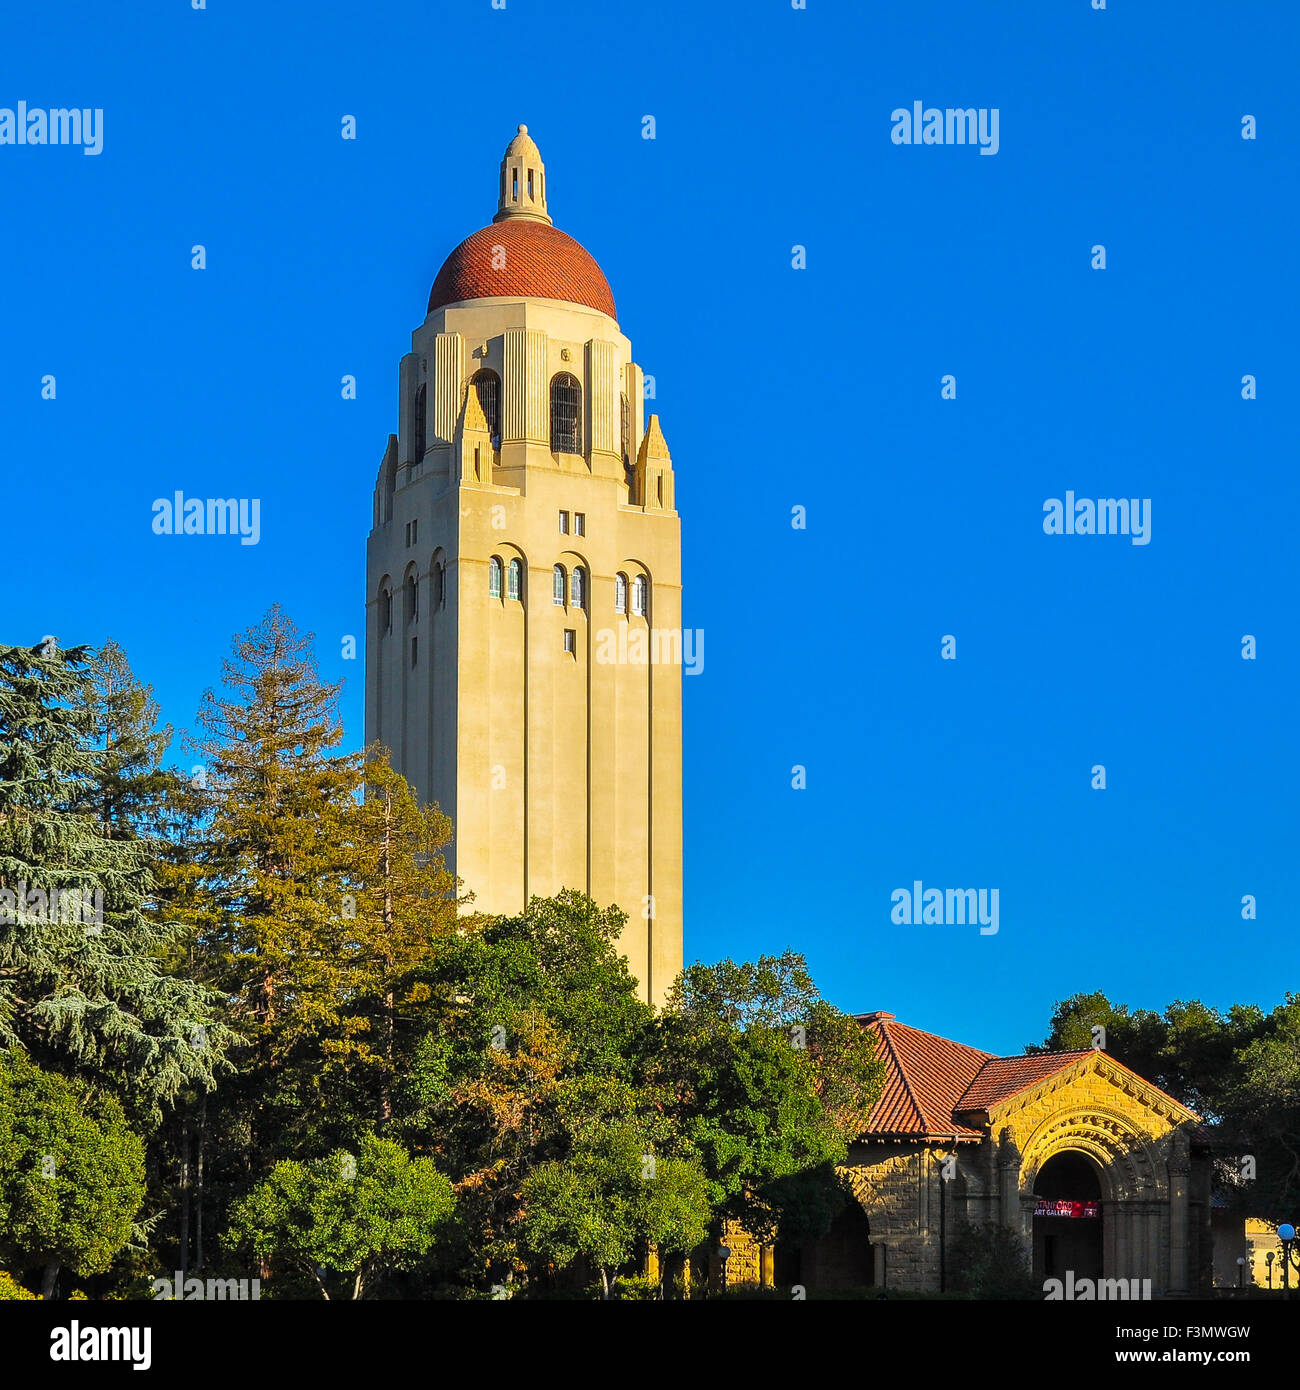 Hoover Tower, Stanford University - Palo Alto, CA, USA Stockfoto